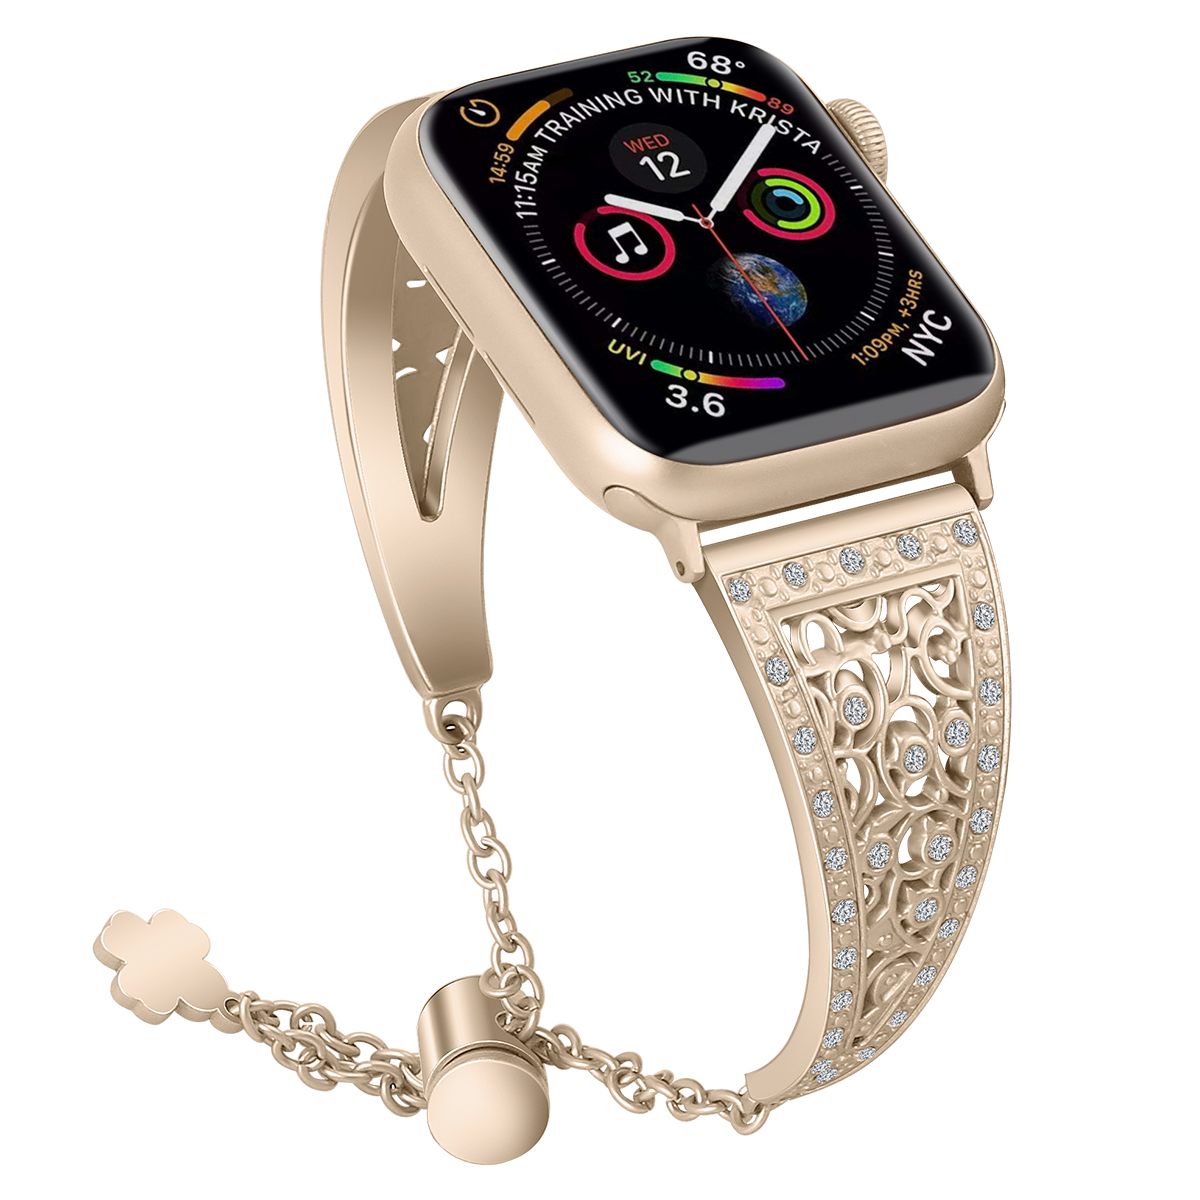 Cuff u0026 Chain Bracelet For Apple Watch | StrapsCo